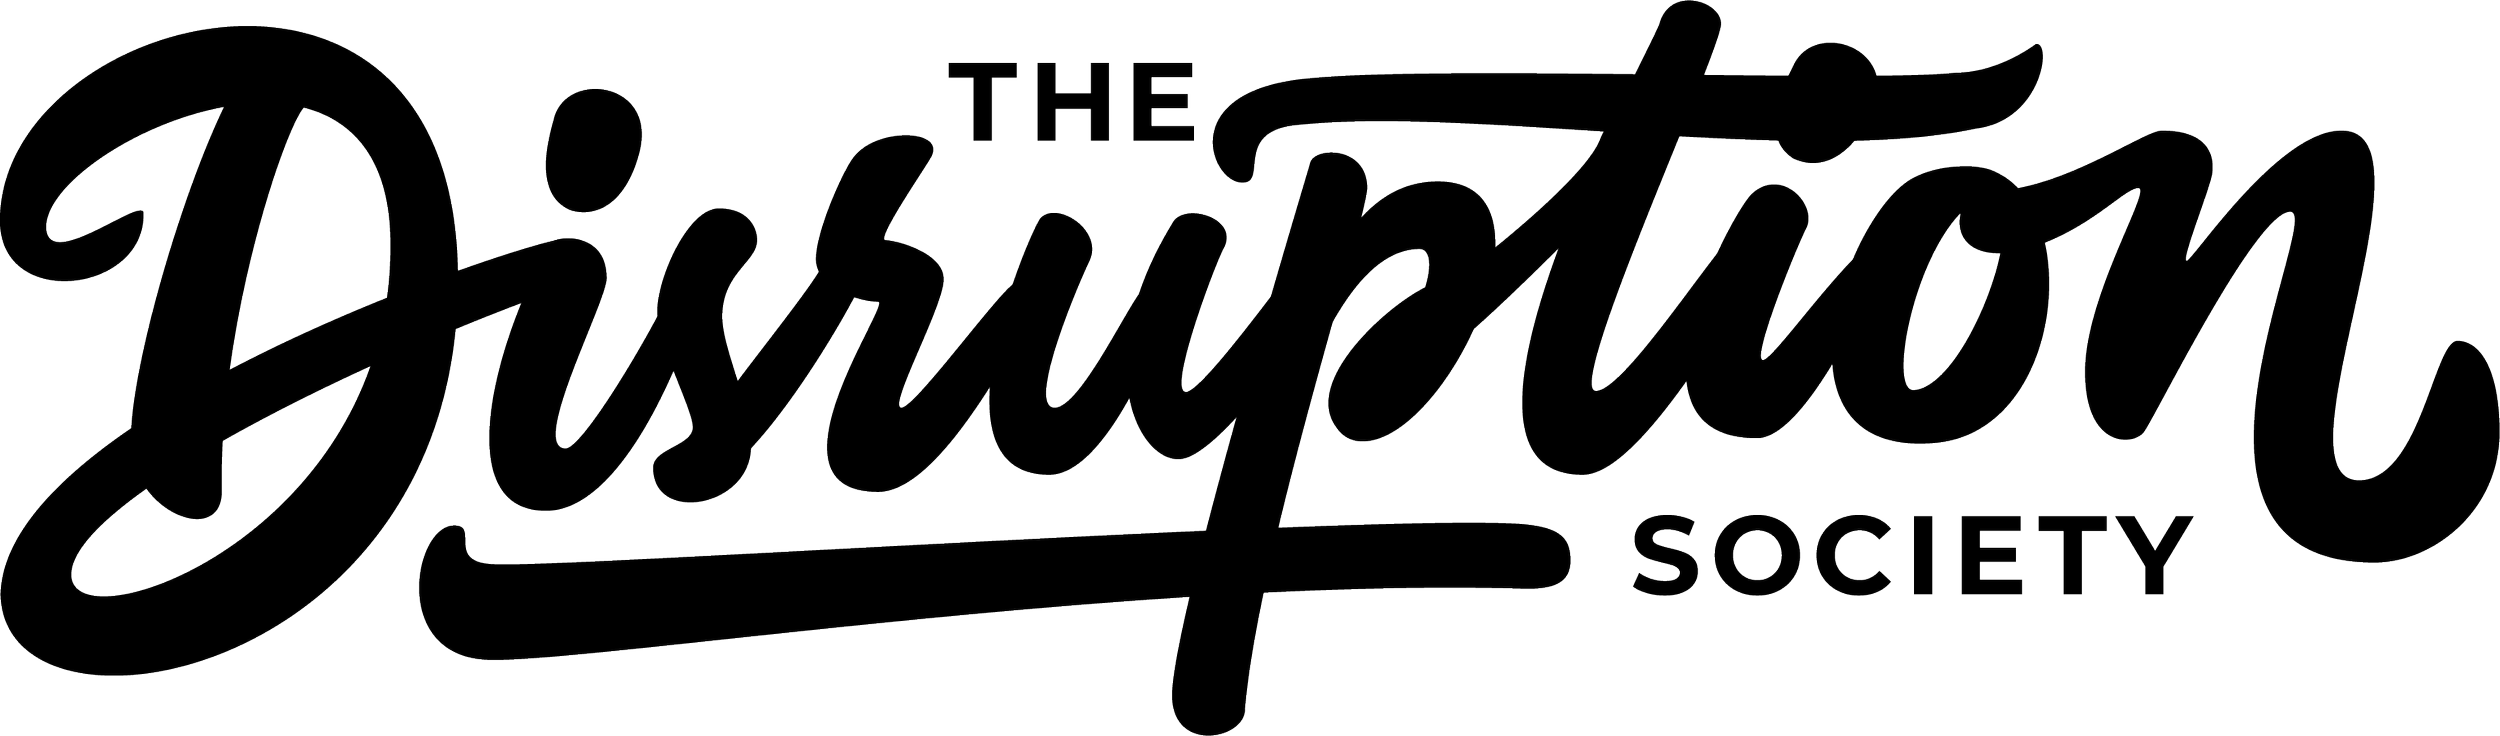 The-Disruption-Society-Black-Logo-Web.png